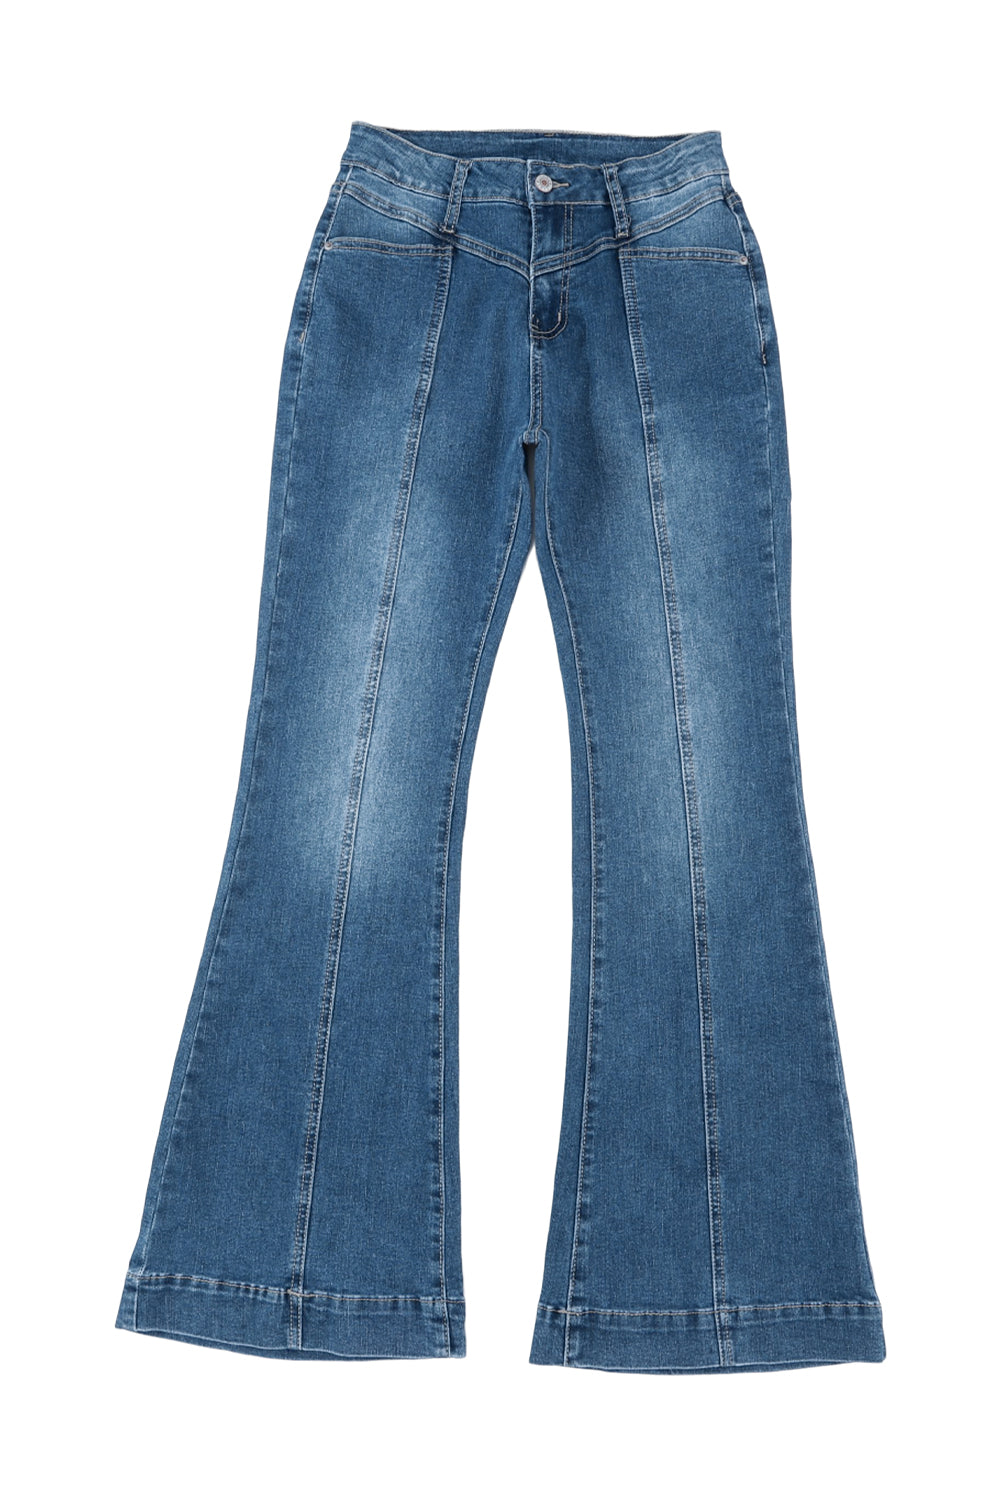 Blue Dark Wash High Waisted Bell Bottom Jeans for Women